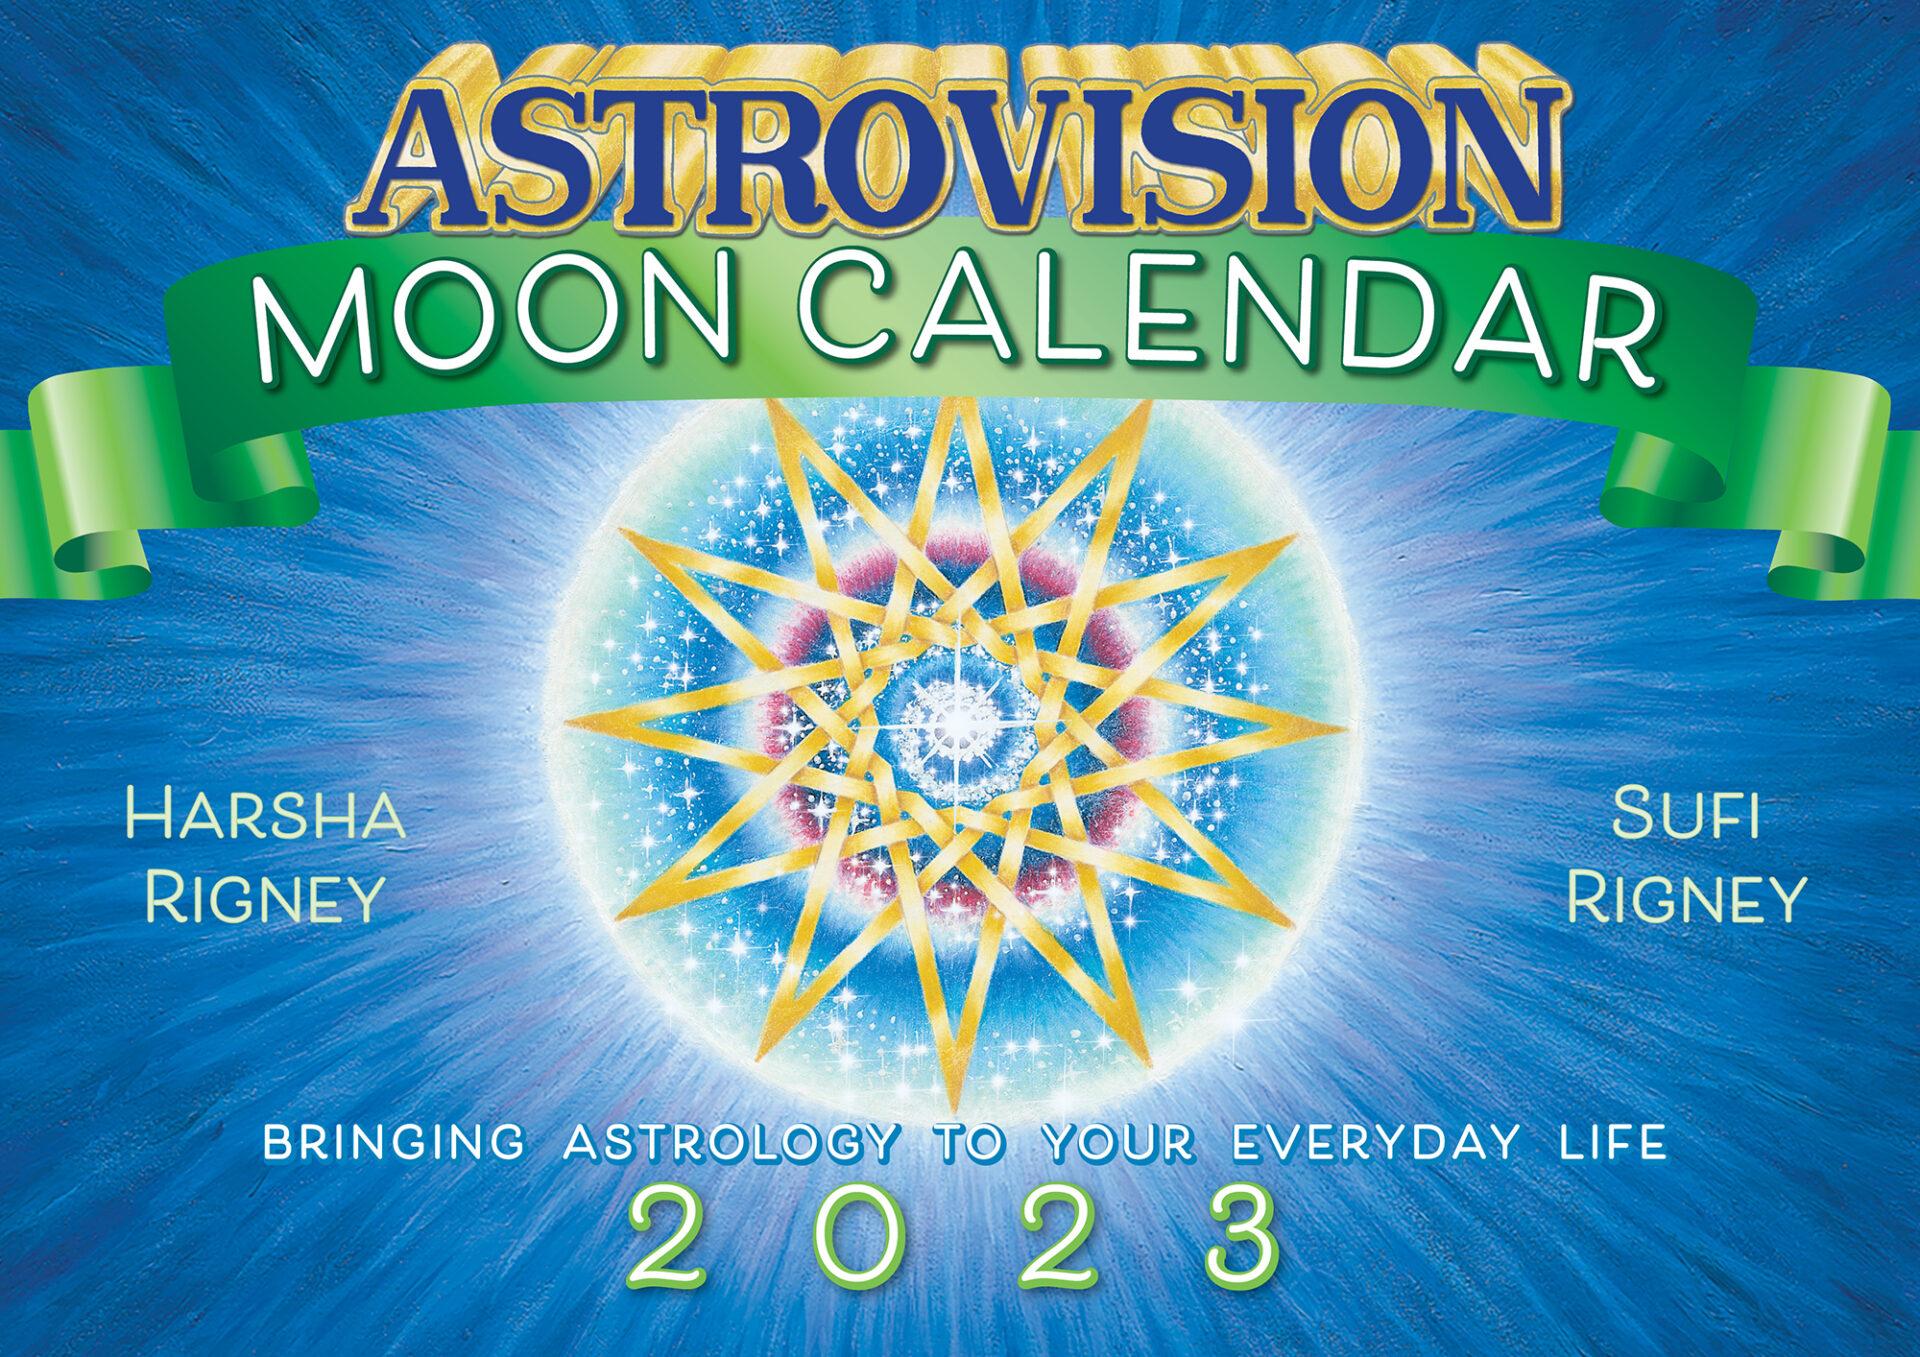 Astrology, Moon Calendar, Artwork, Horoscopes Astrovision